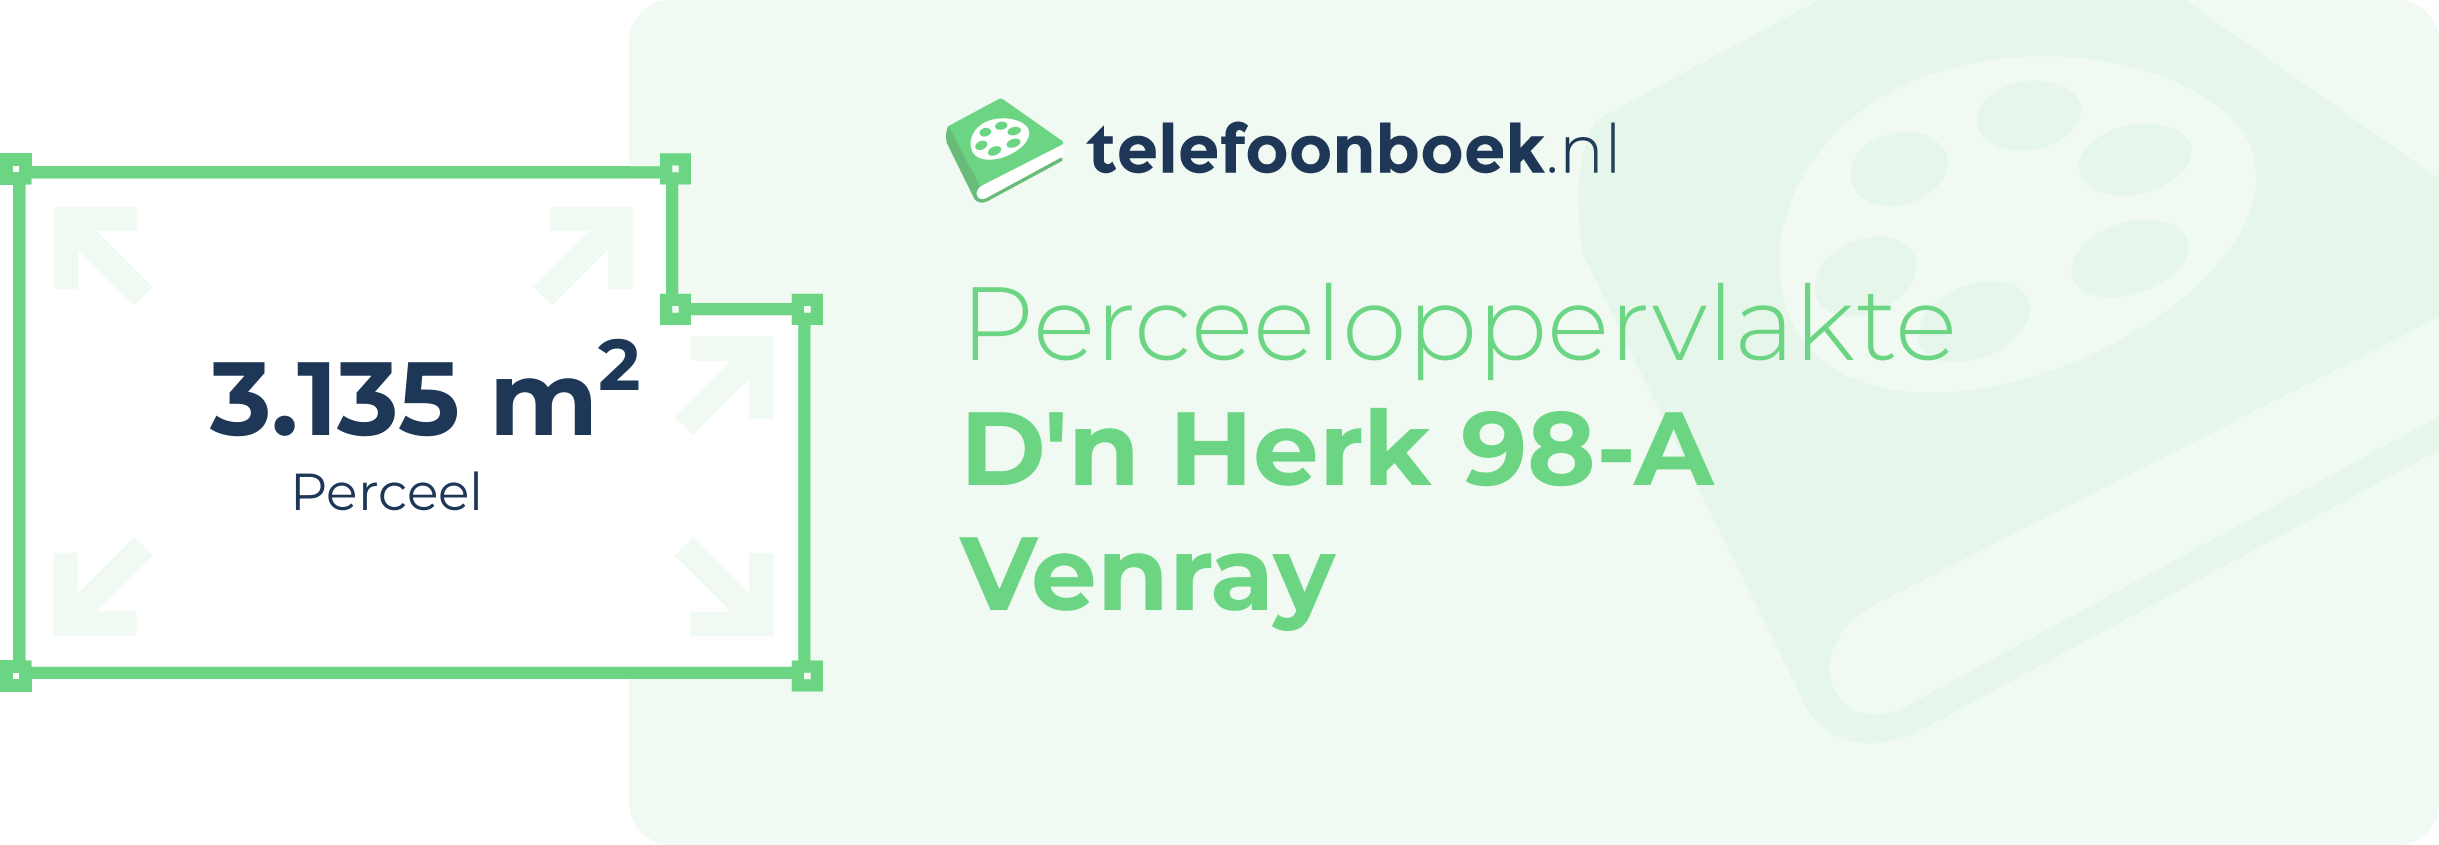 Perceeloppervlakte D'n Herk 98-A Venray